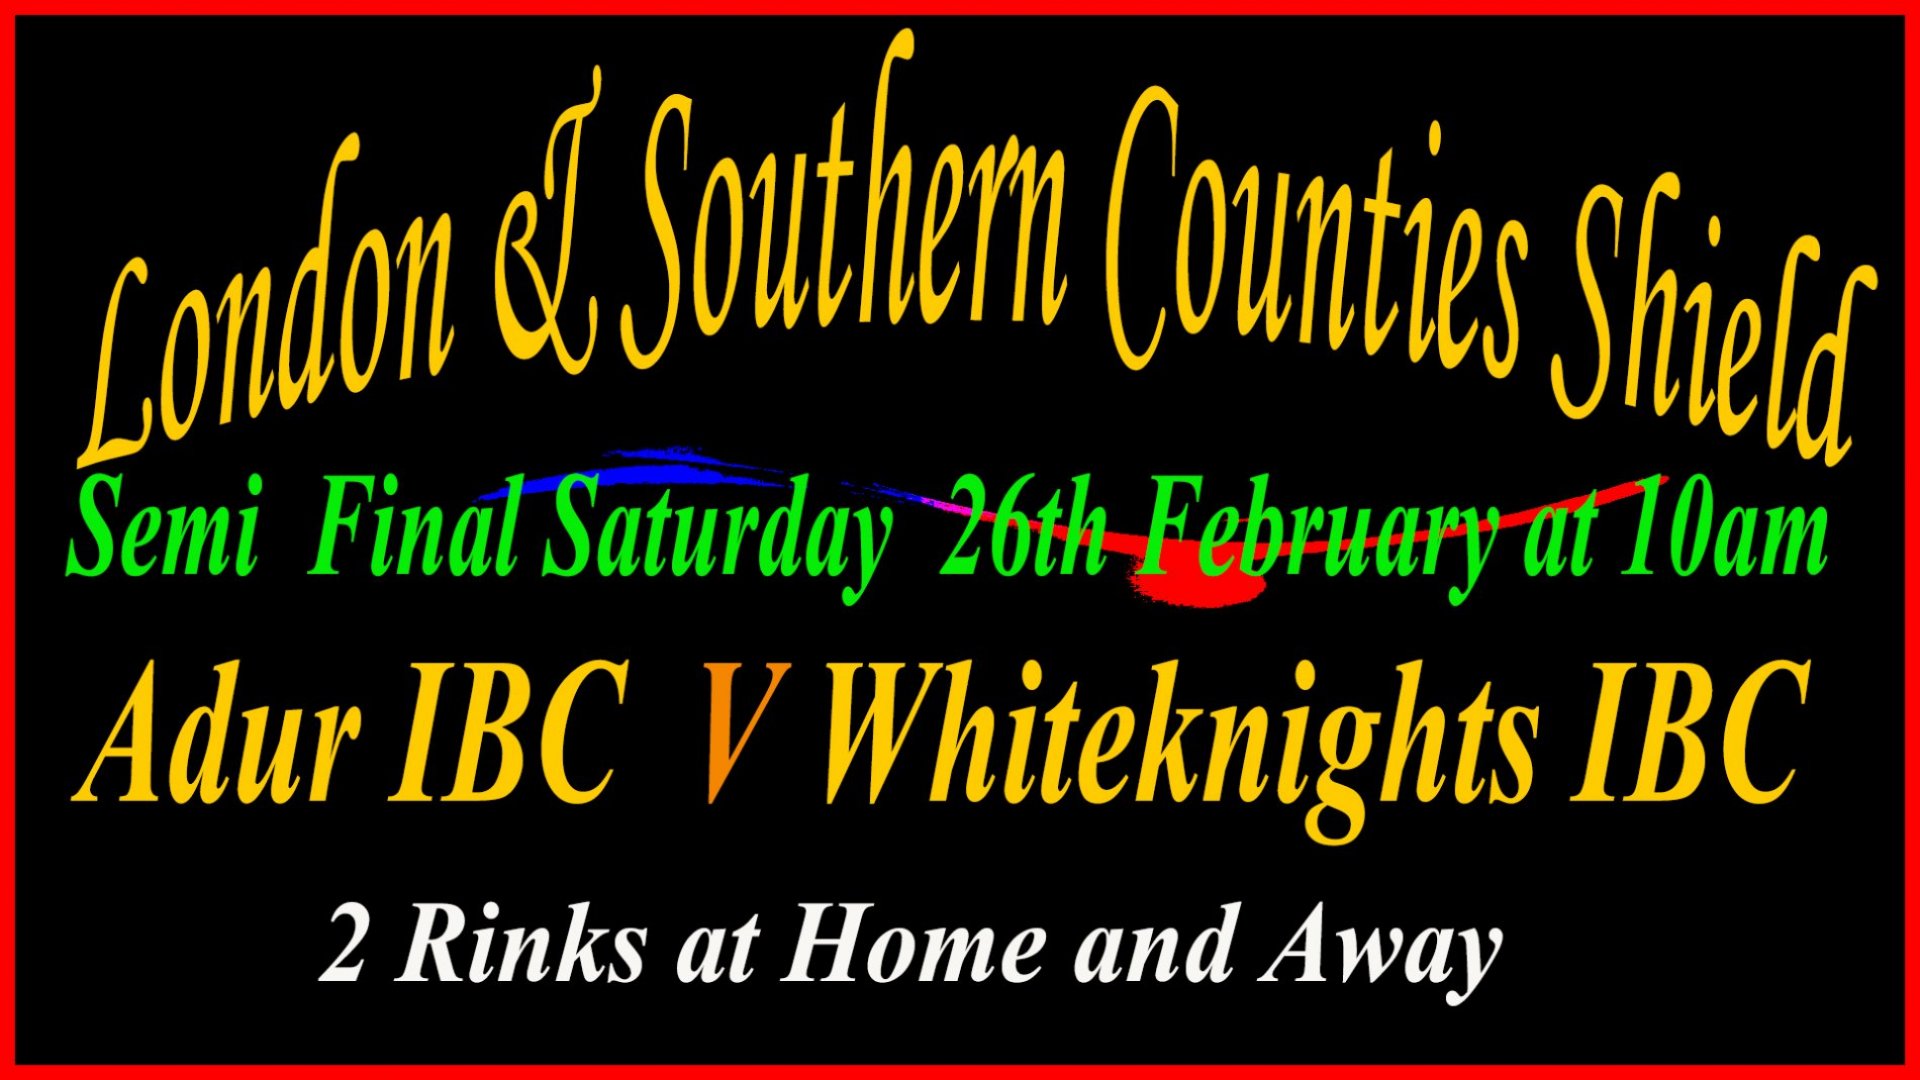 London & Southern Counties Shield -Adur IBC v Whitenights IBC - 2 Rinks (26.2.22).jpg